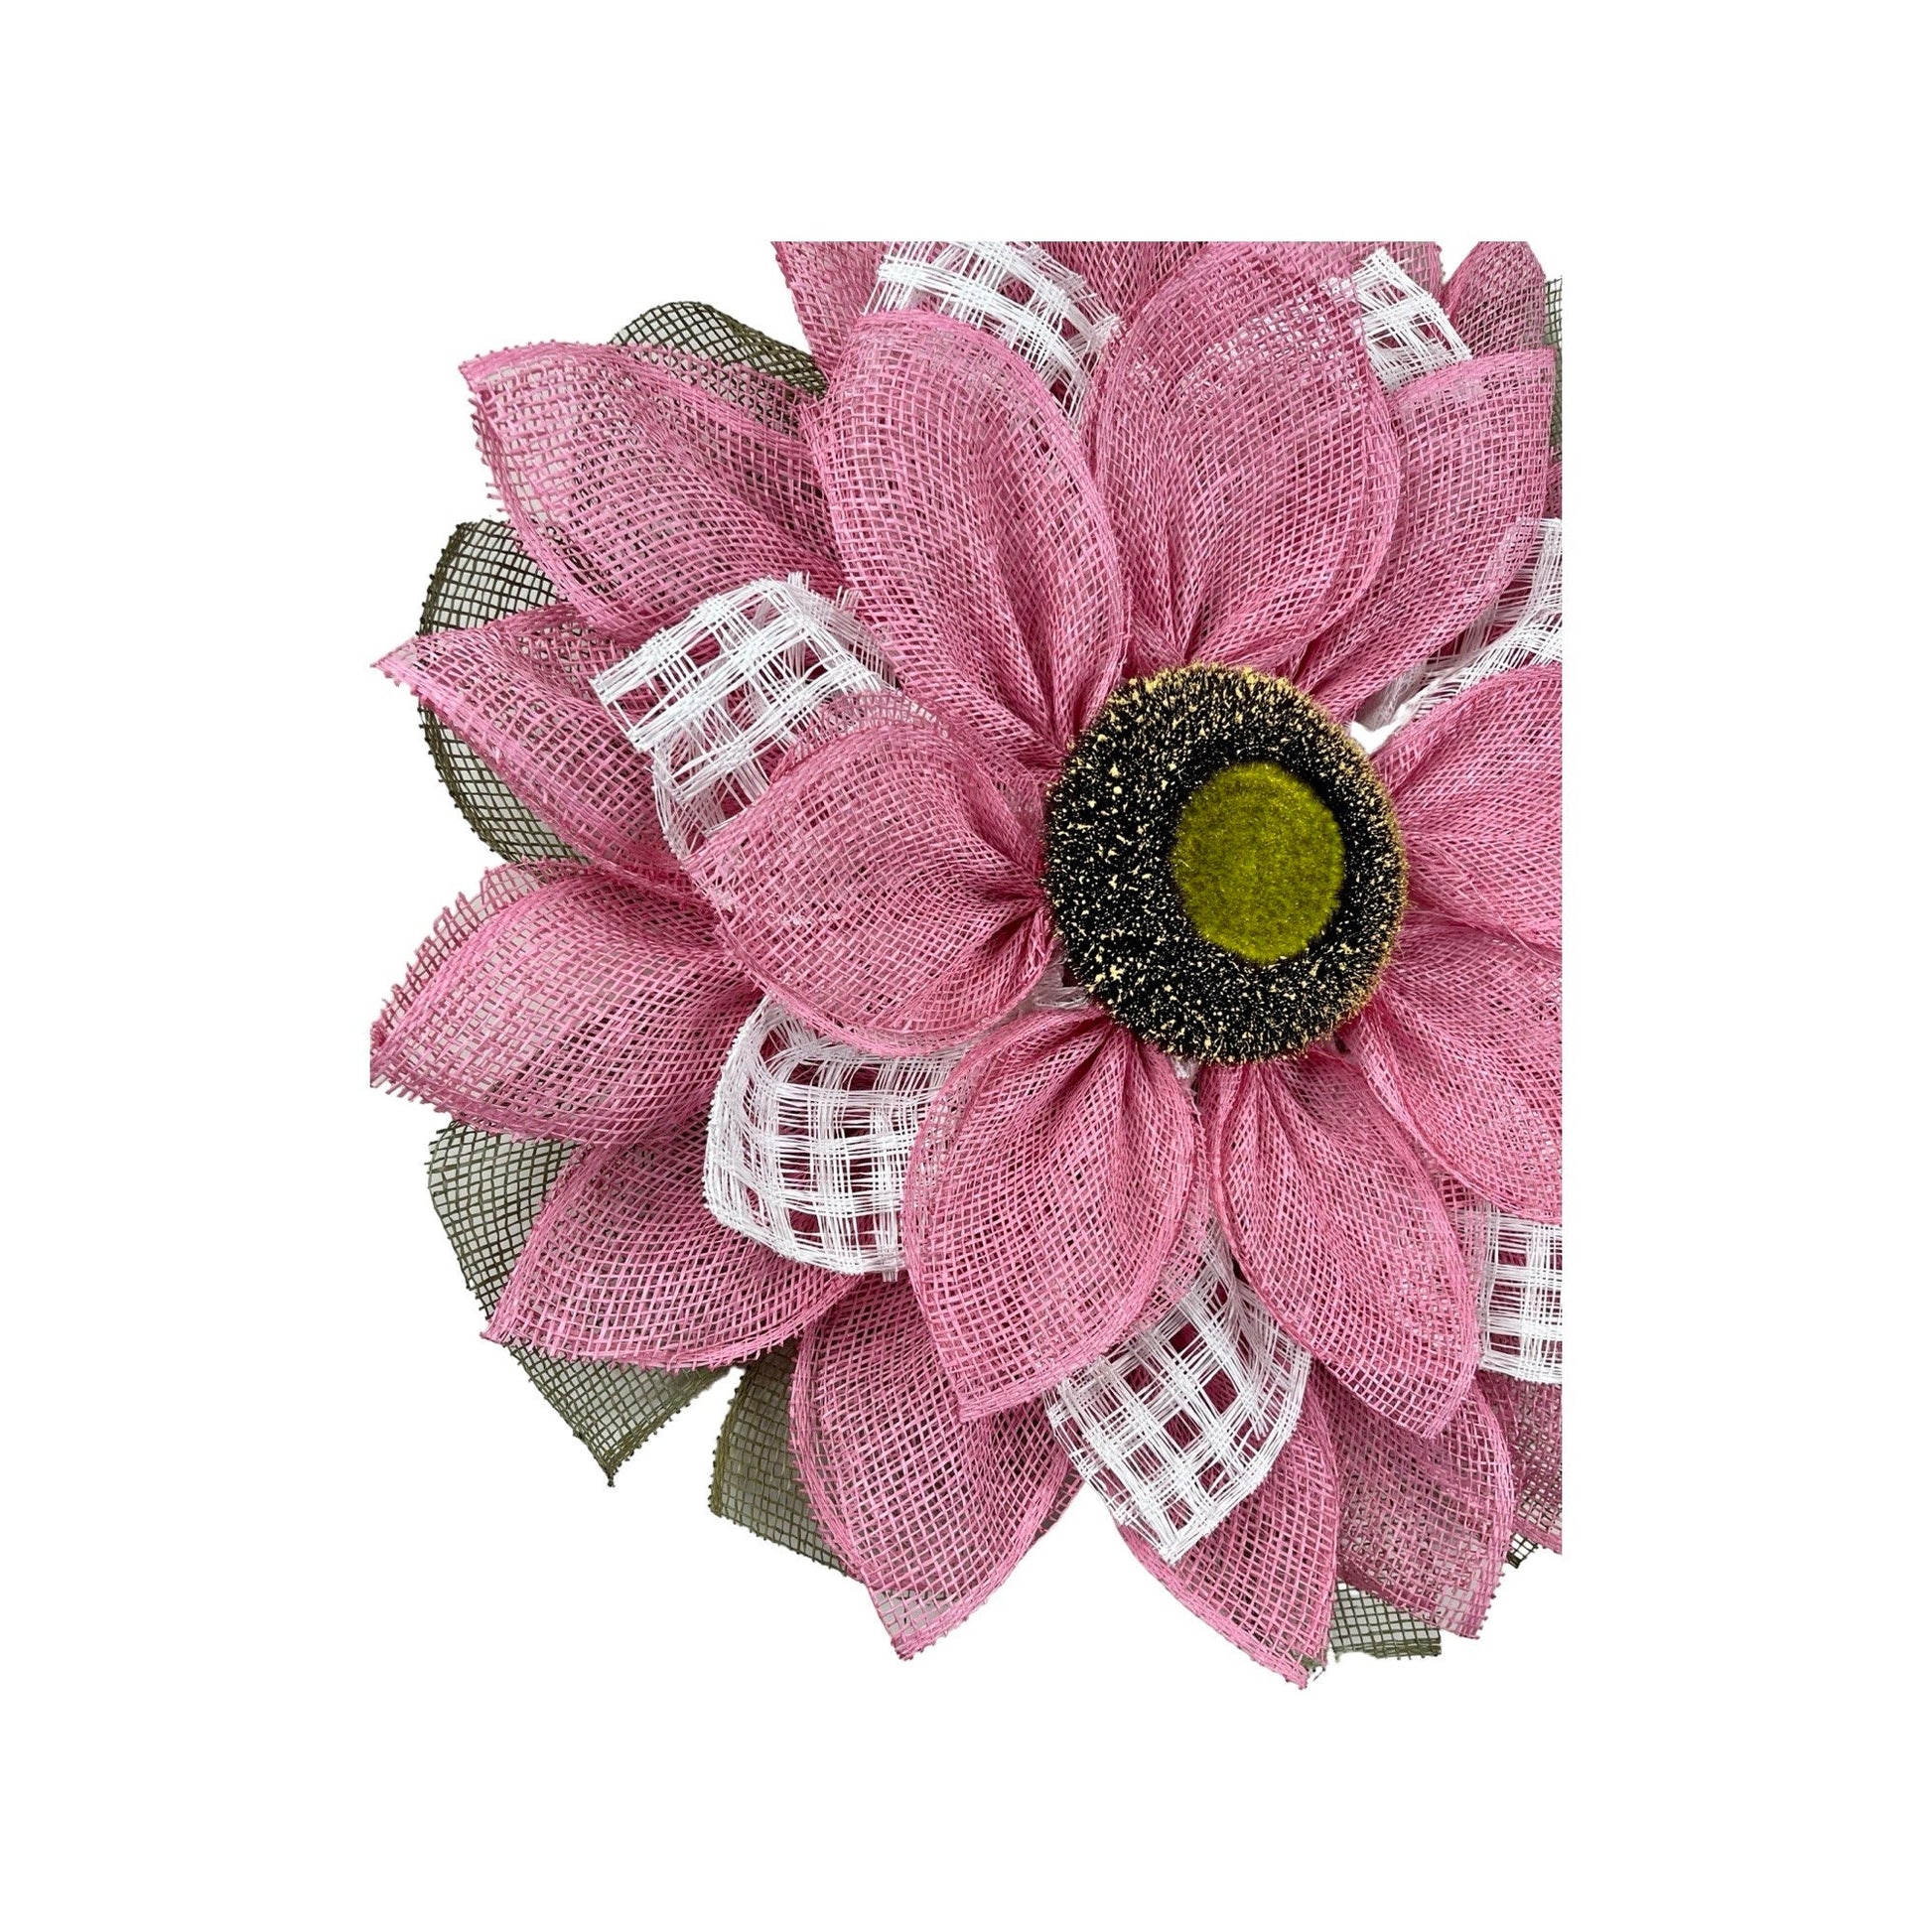 Flat pink and white flower wreath, flower wreath poly burlap, flower wreath front door, screen door flower wreath, pink and white checked